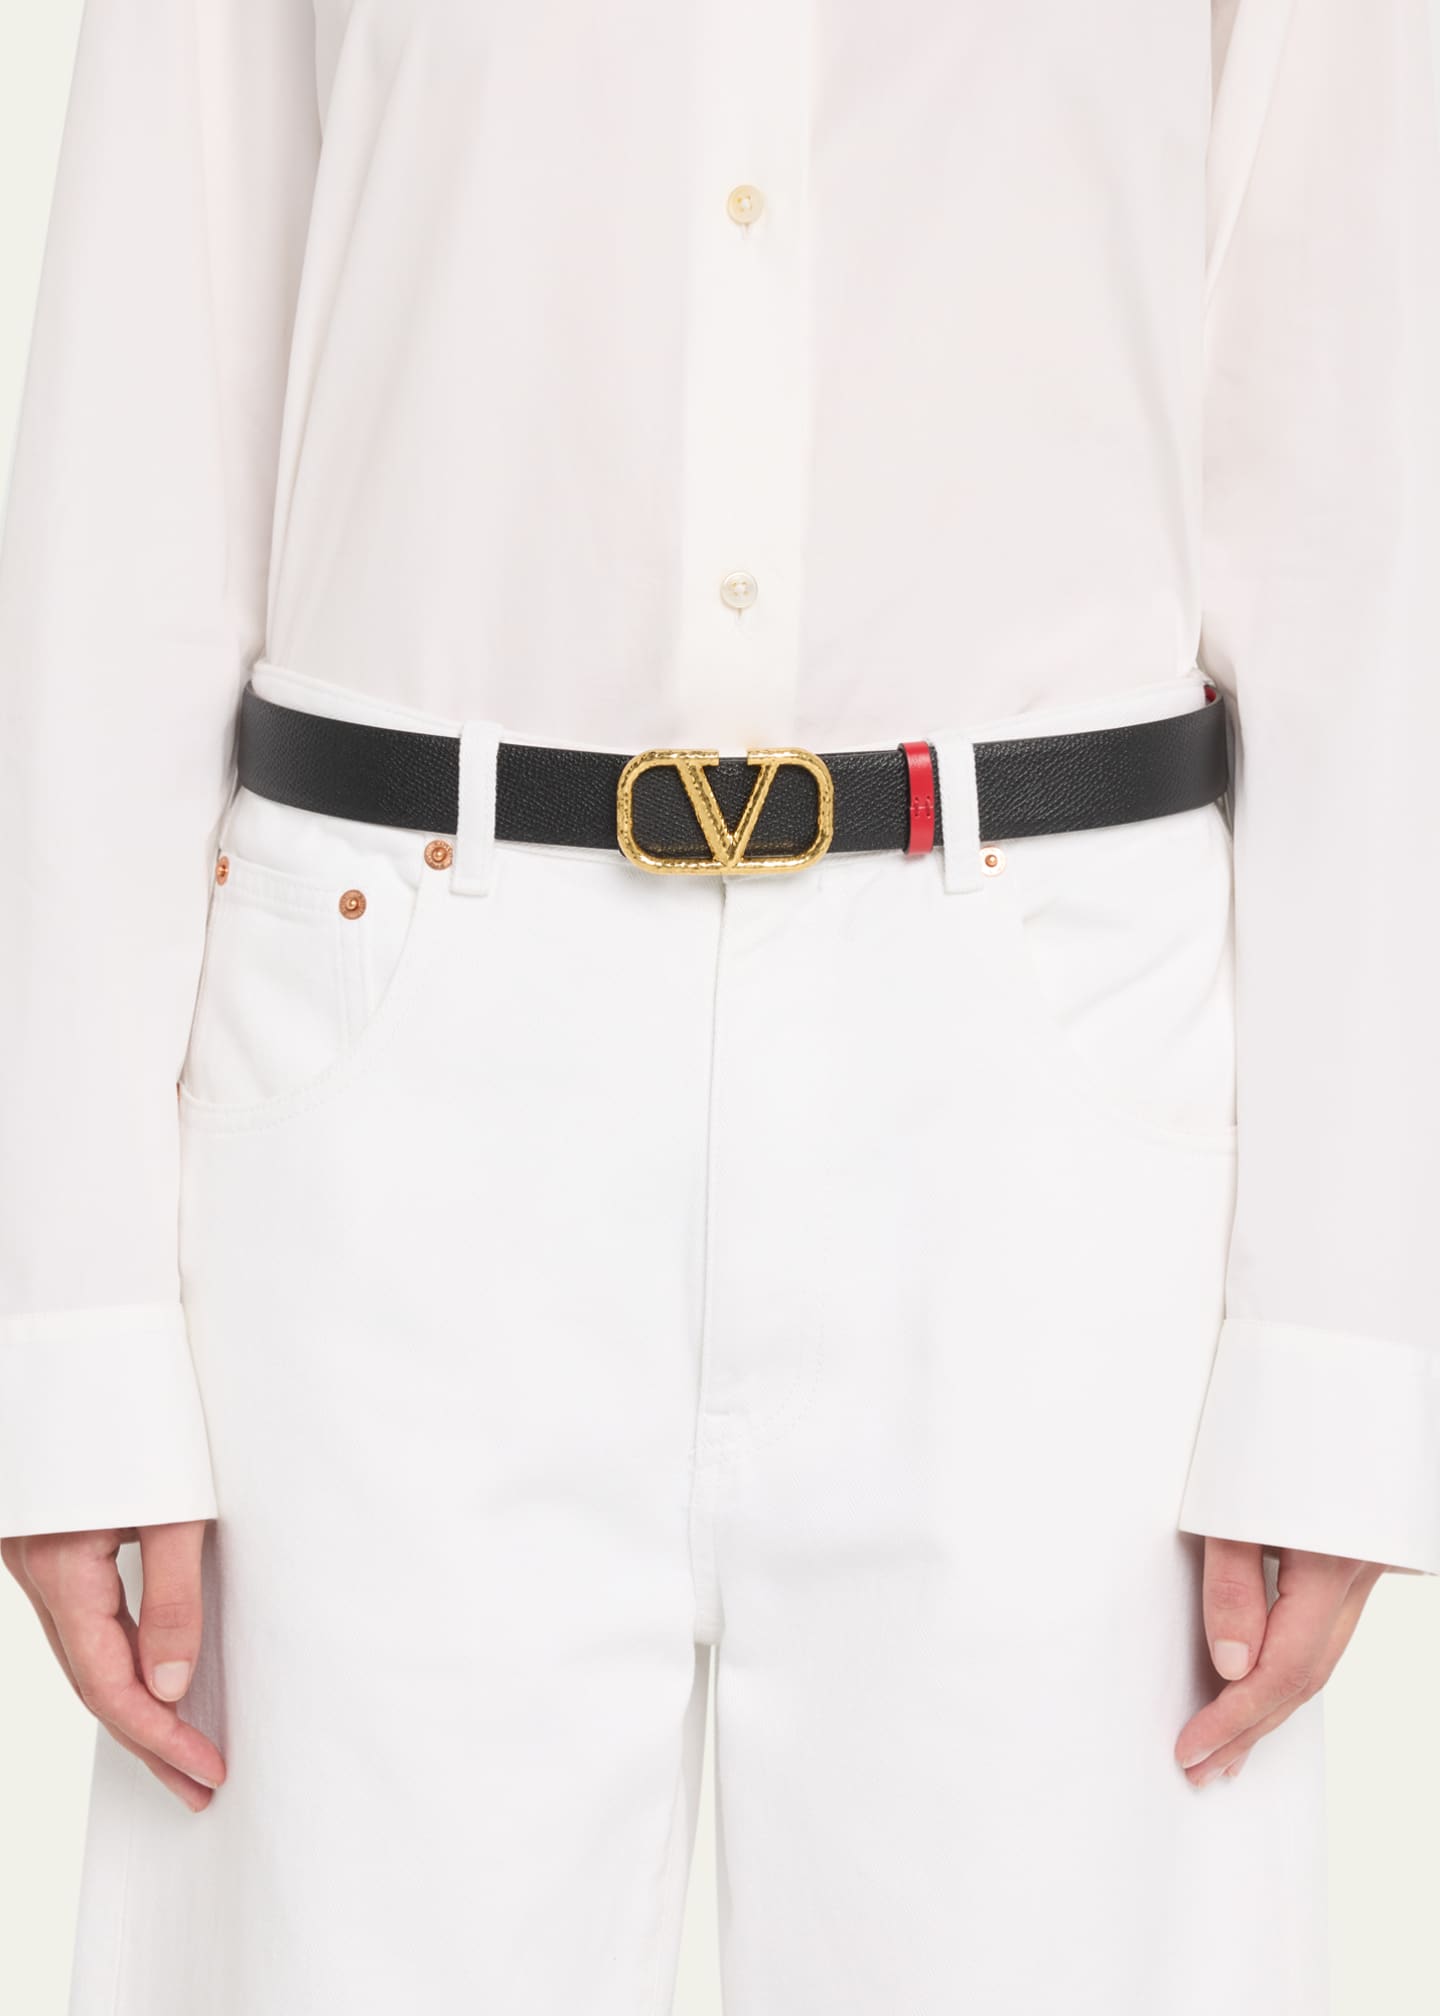 Valentino Vlogo Reversible Leather Belt